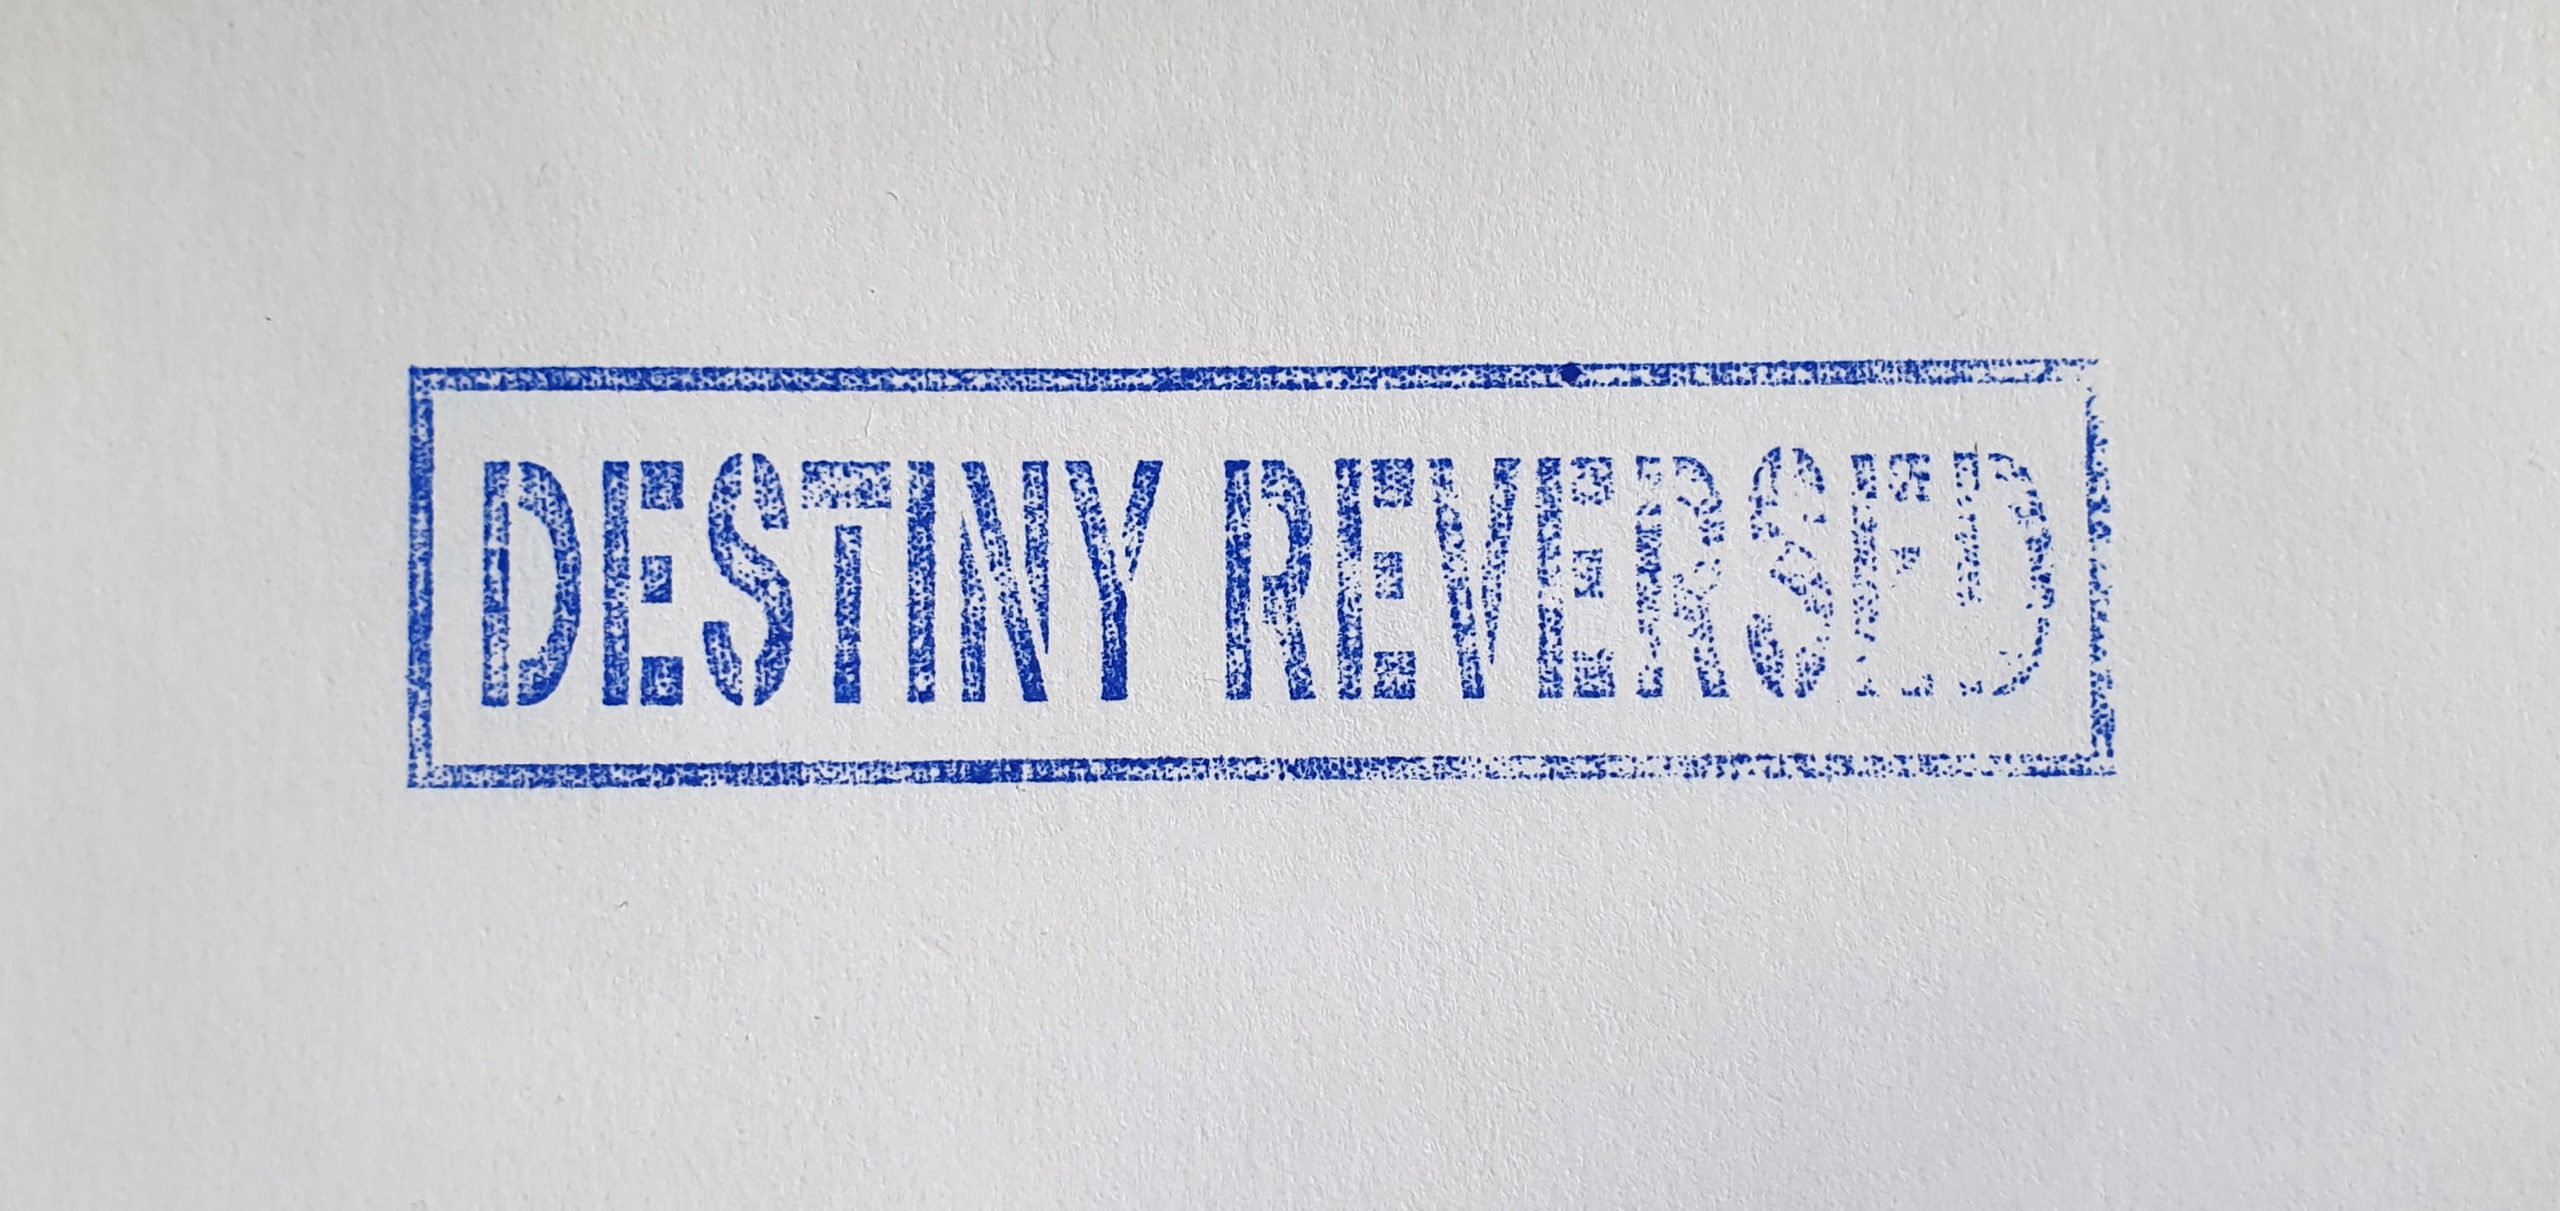 Reversible destiny office – Maria Klaassen-Andrianova